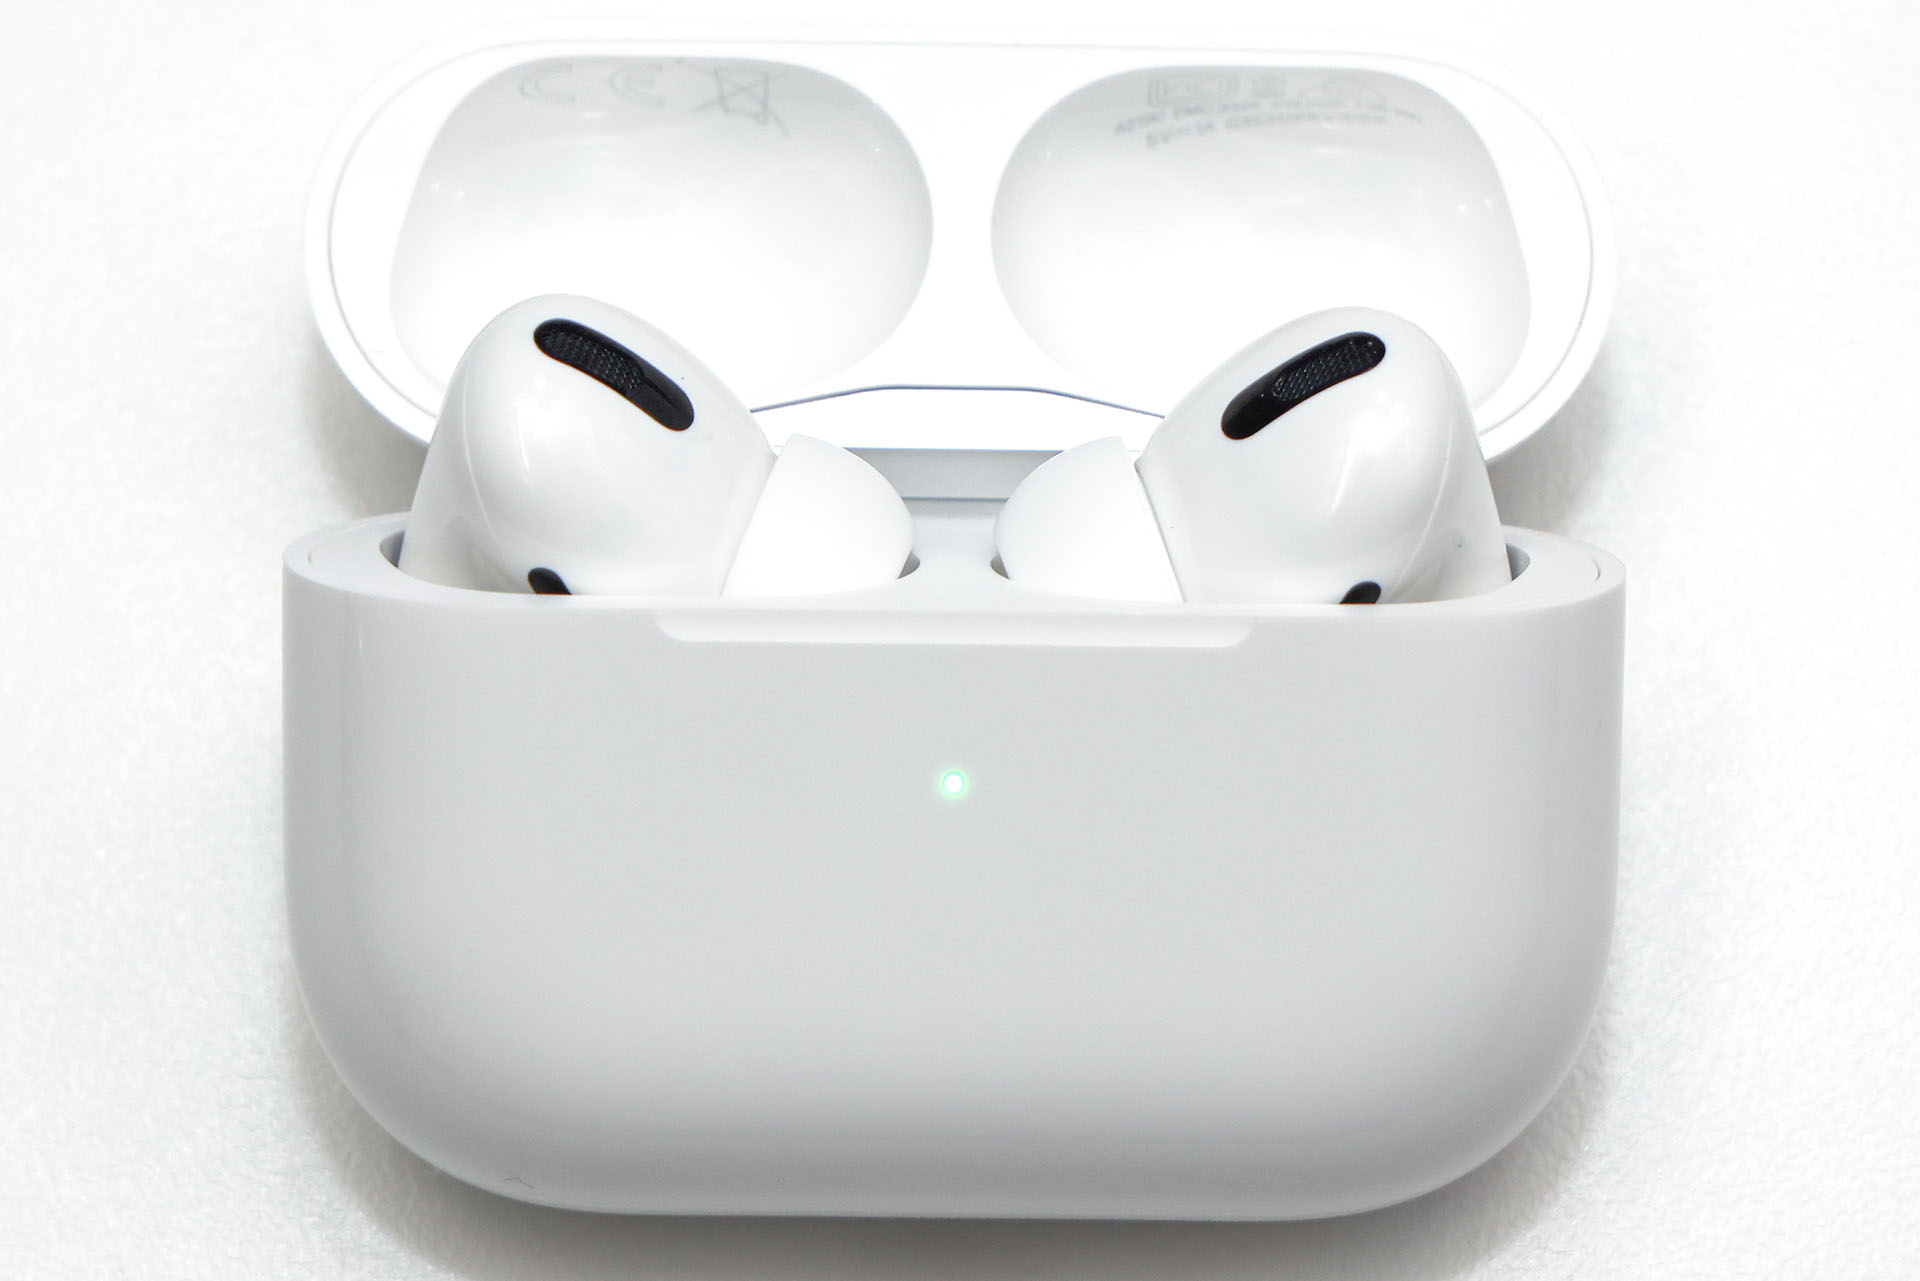 Apple Airpods (第3世代)  MagSafe エアポッズ アップル